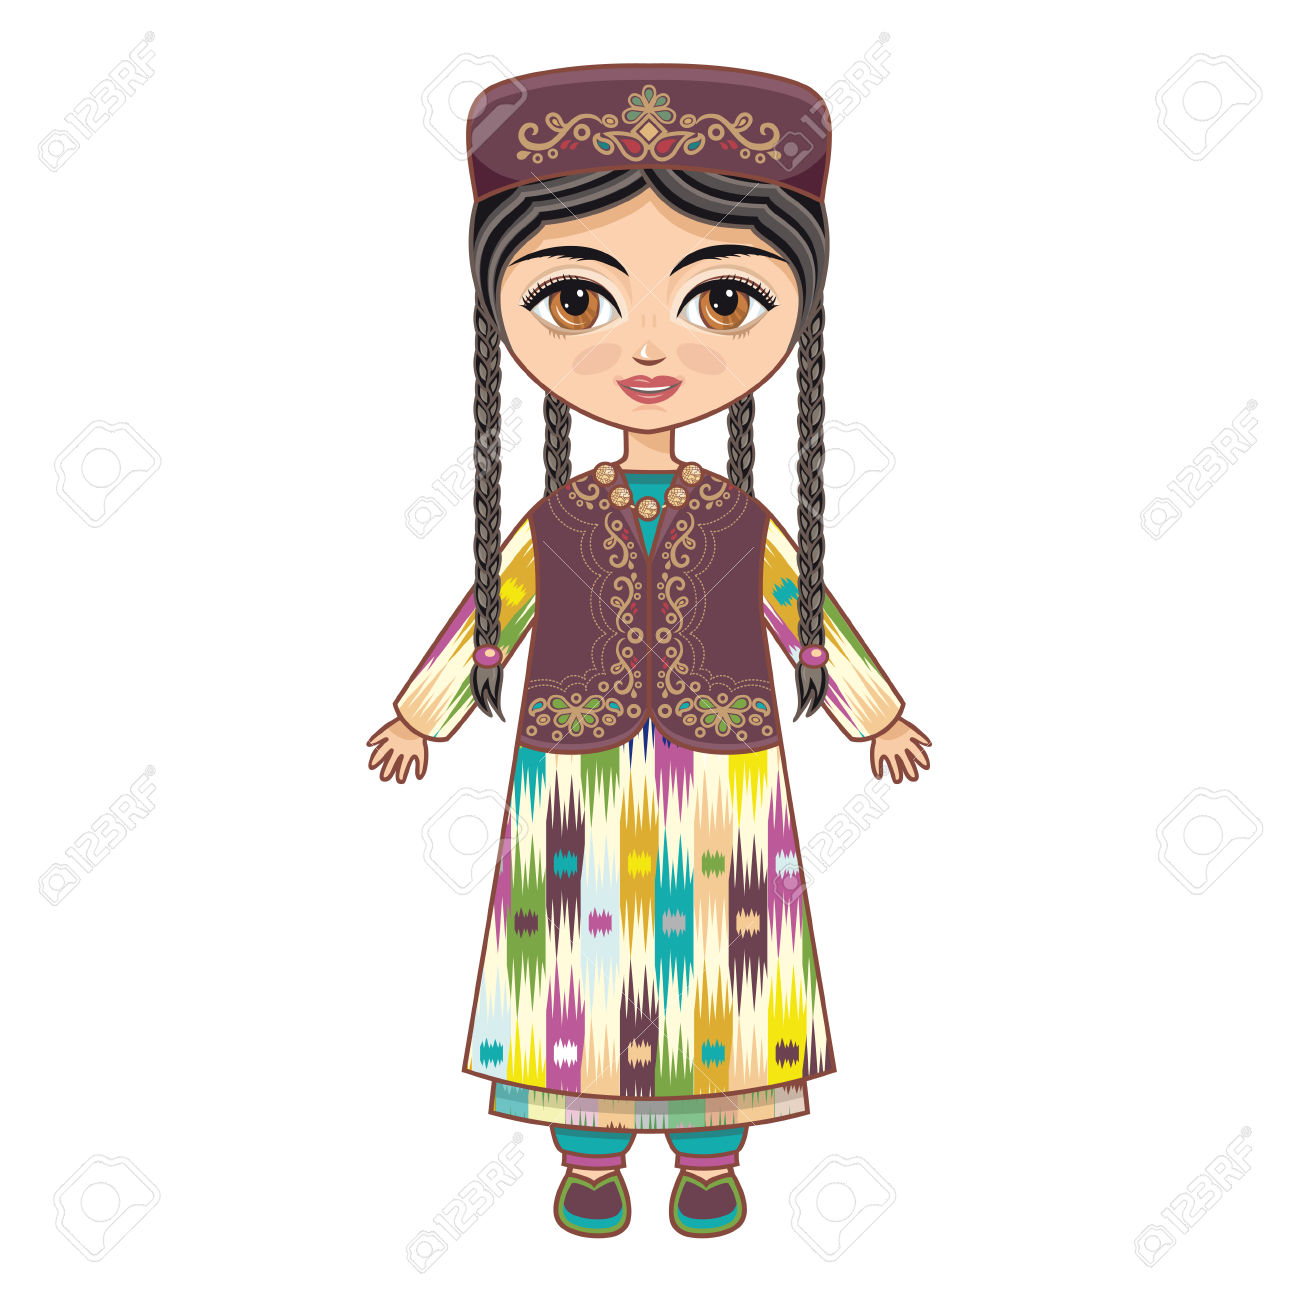 294 Vector Uzbekistan Stock Vector Illustration And Royalty Free.